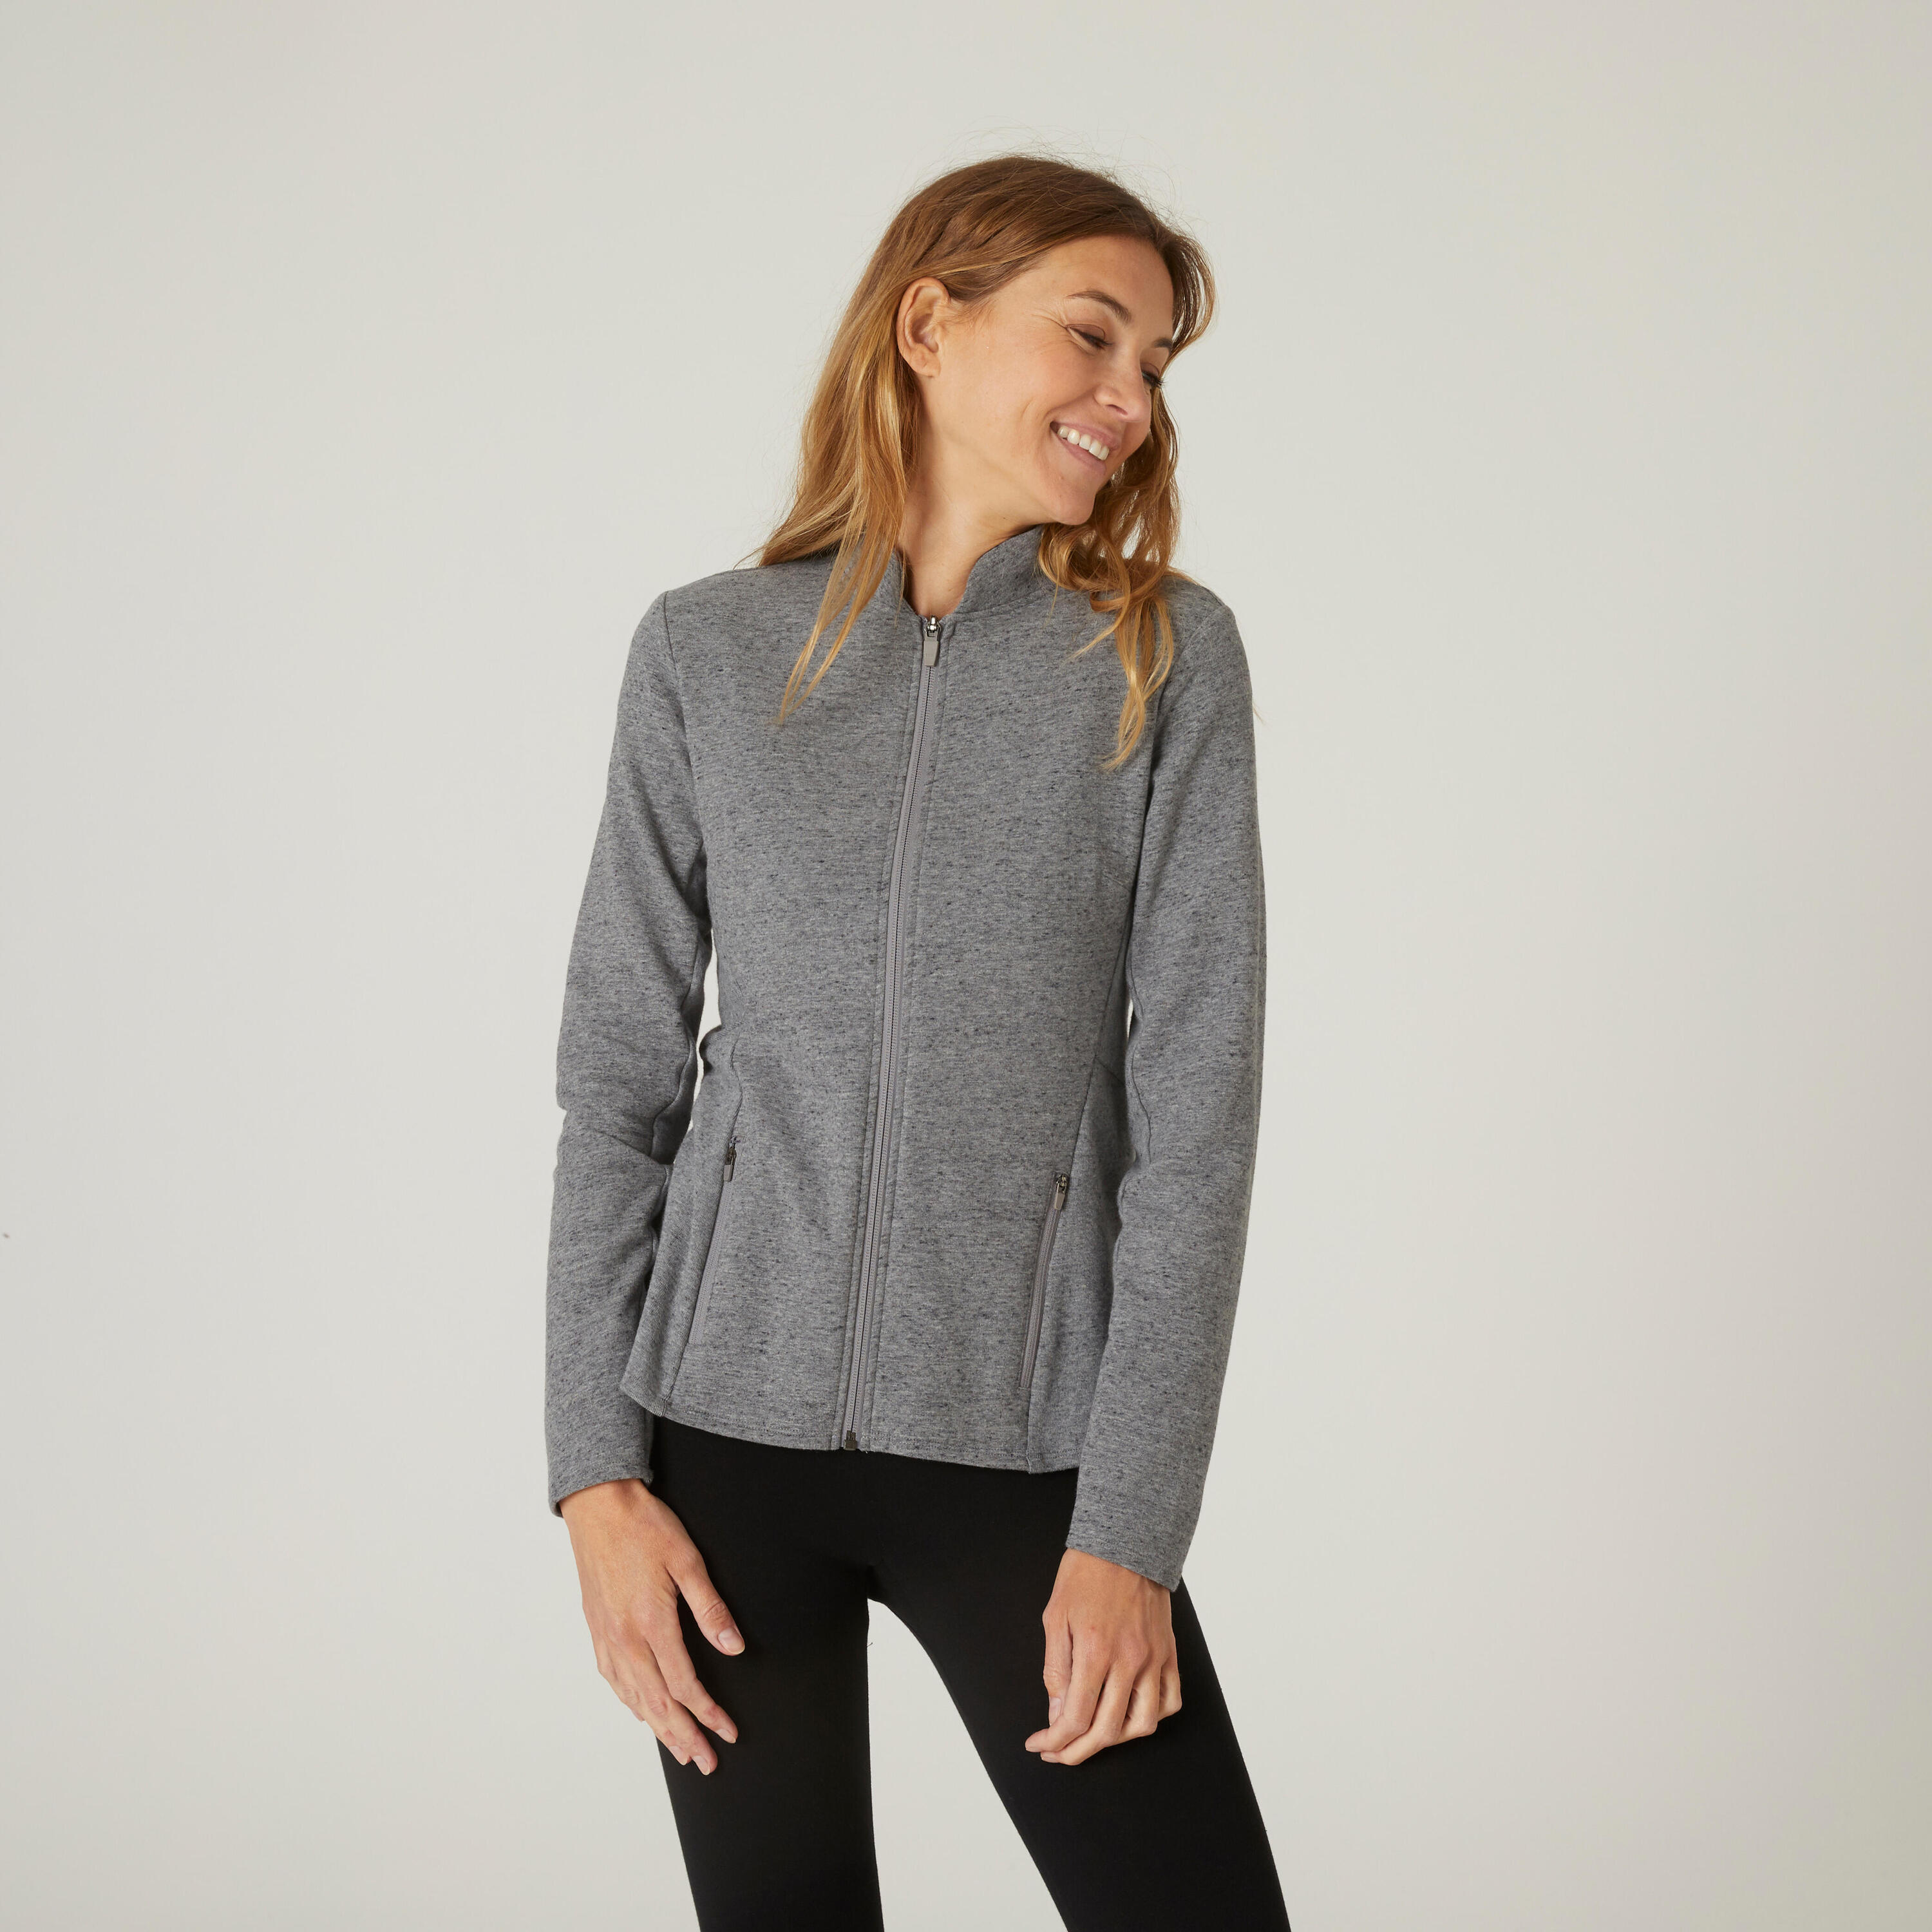 NYAMBA Women's Fitted High Neck Zipped Sweatshirt With Pocket 520 - Grey